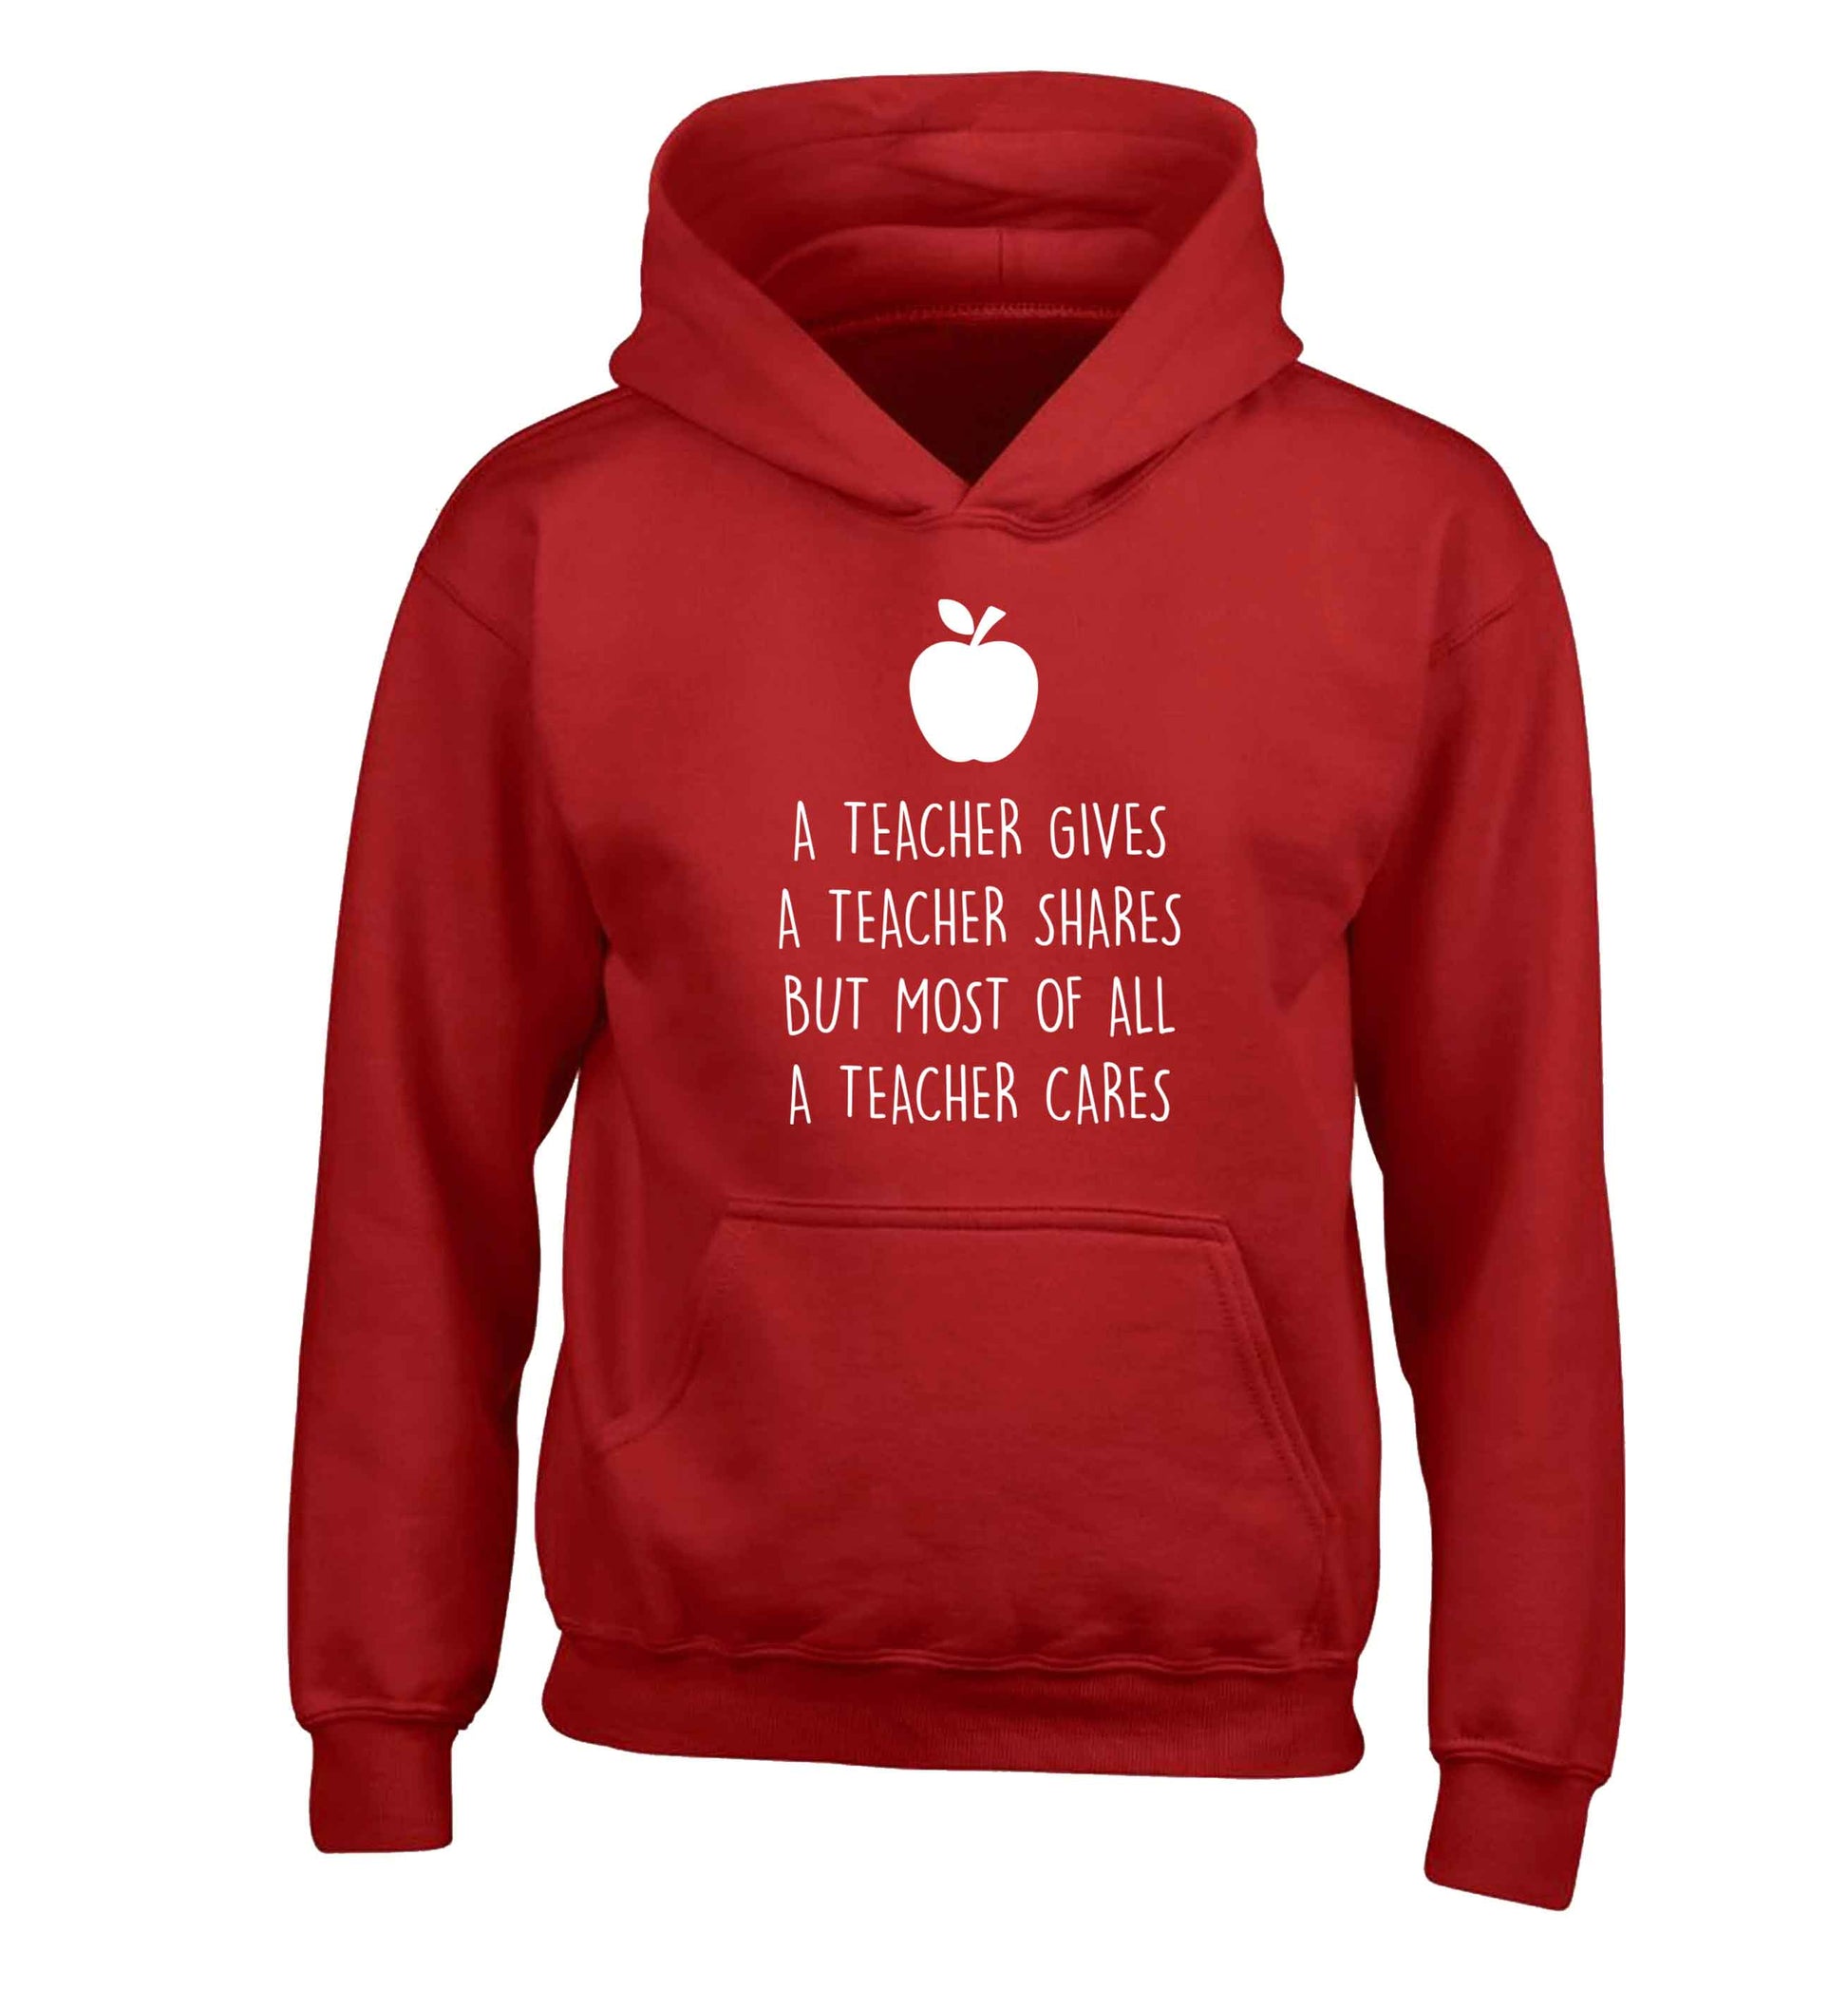 A teacher gives a teacher shares but most of all a teacher cares children's red hoodie 12-13 Years